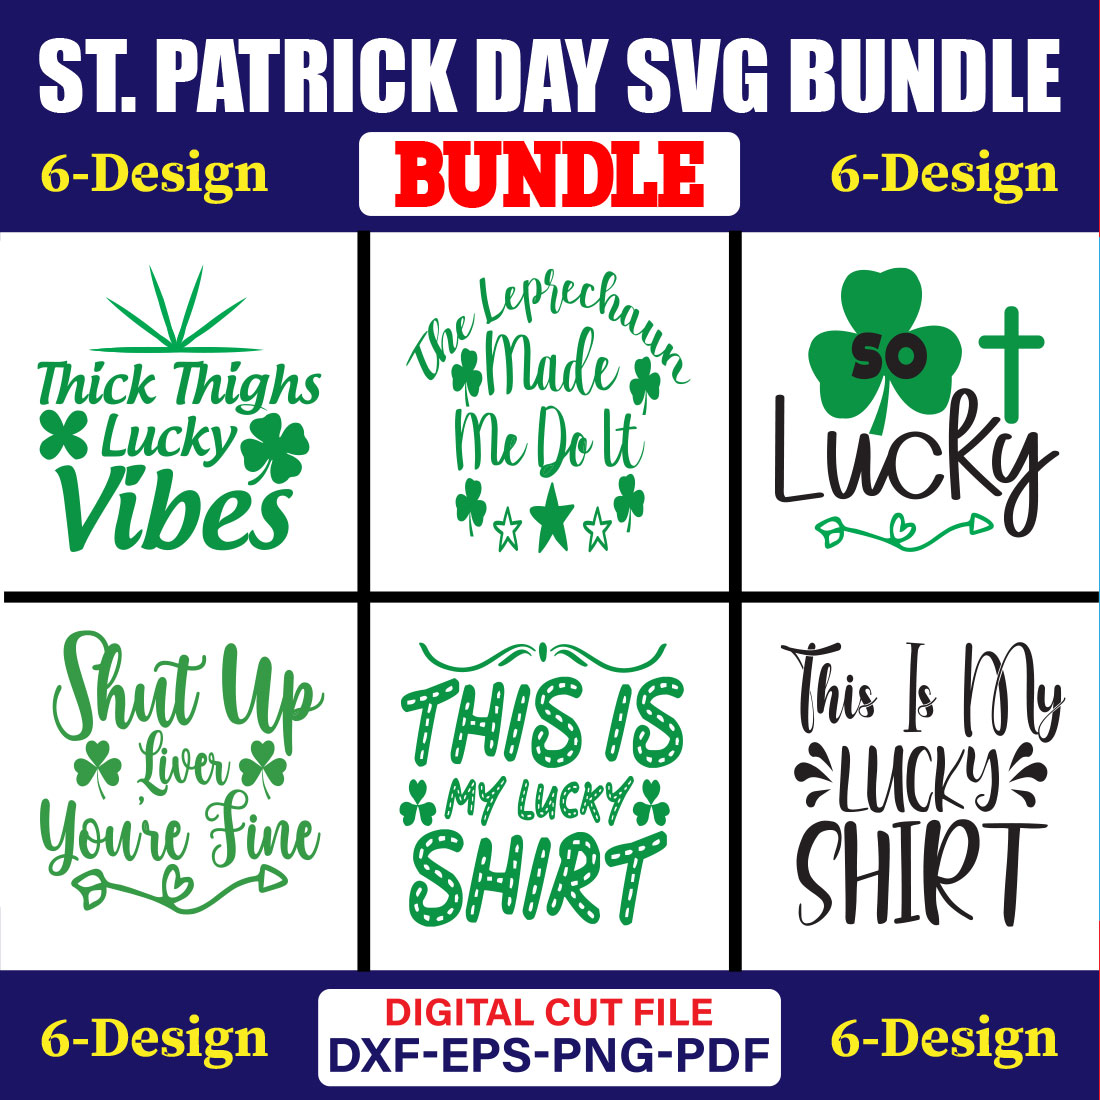 St Patrick Day SVG T-shirt Design Bundle Vol-24 cover image.